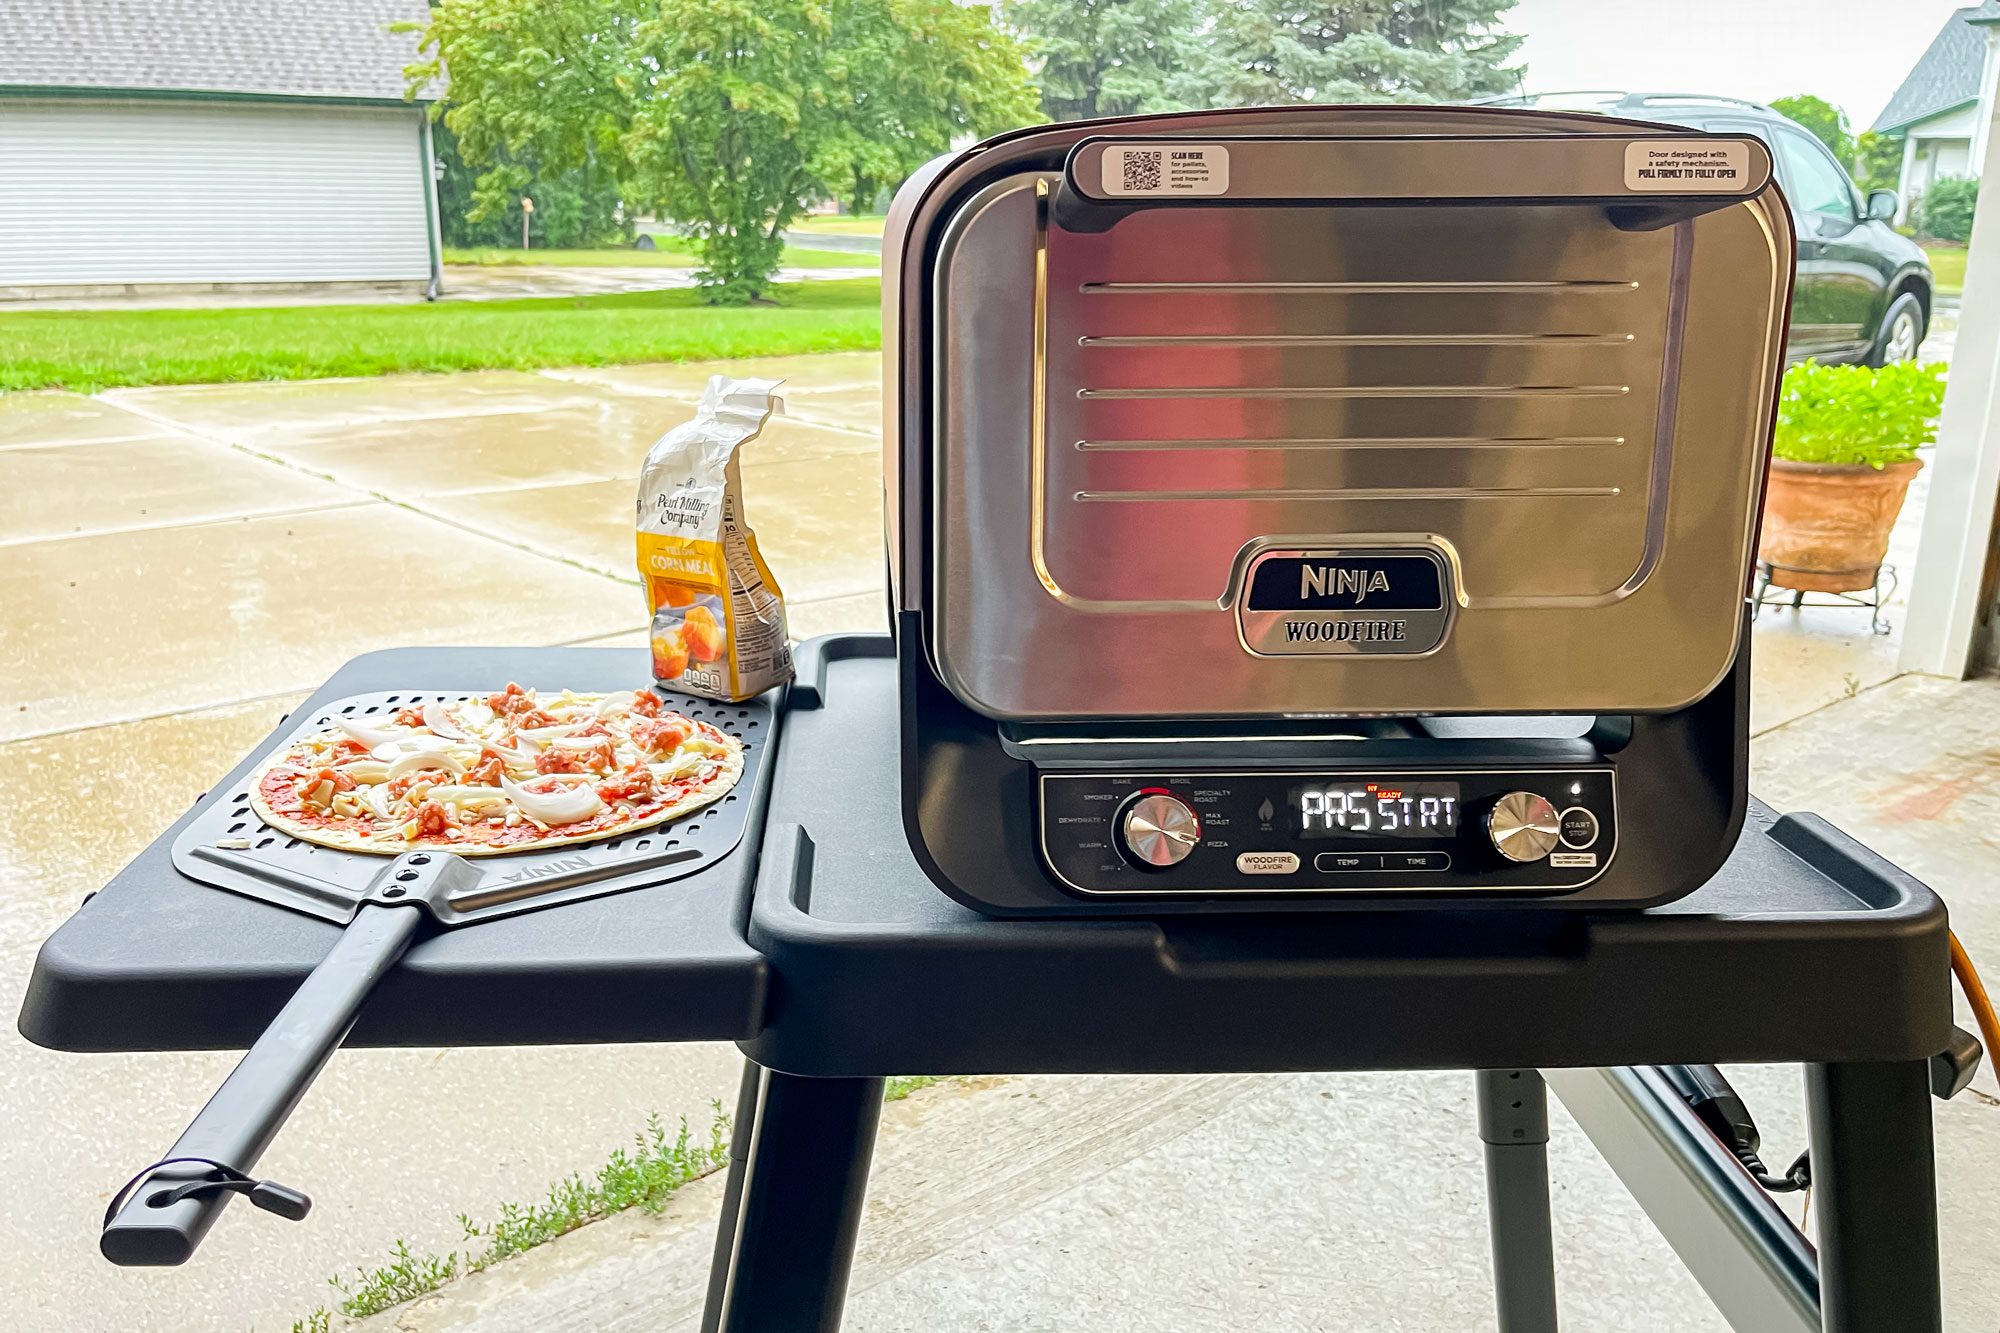 Ninja Woodfire Outdoor Oven review